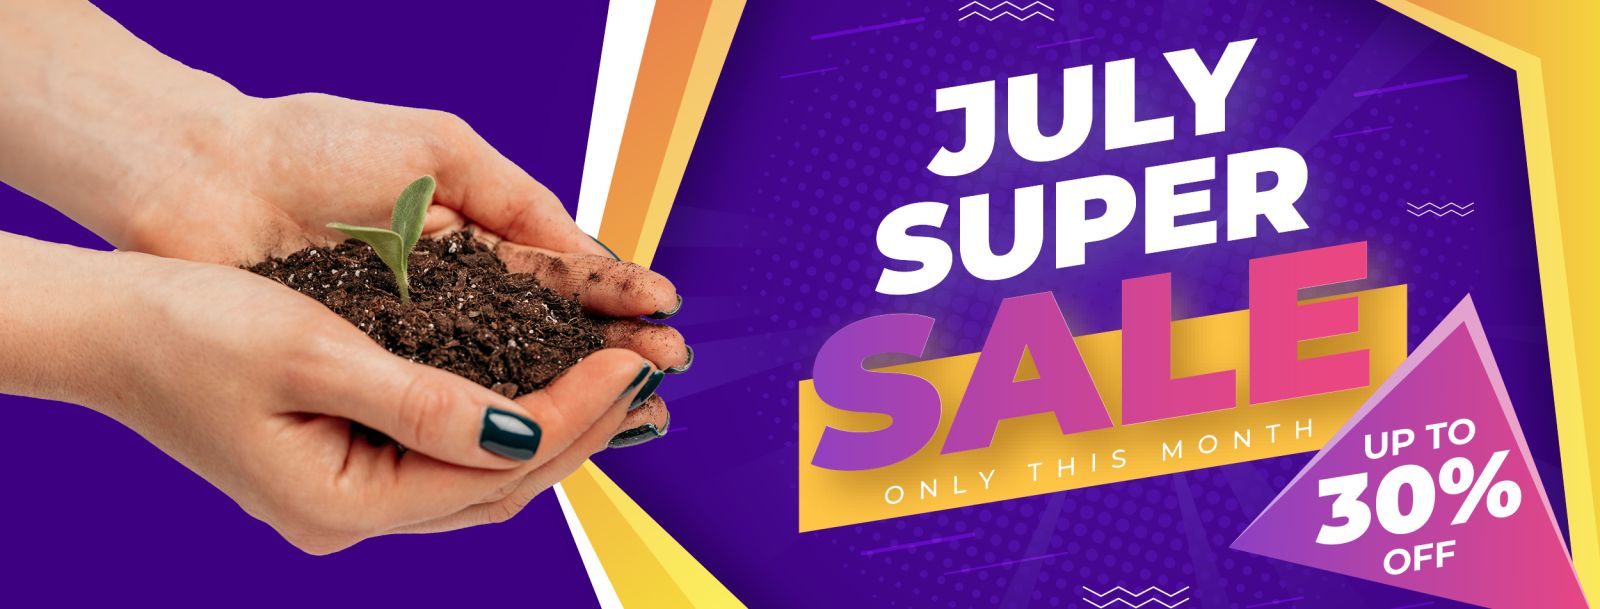 July Super Sale